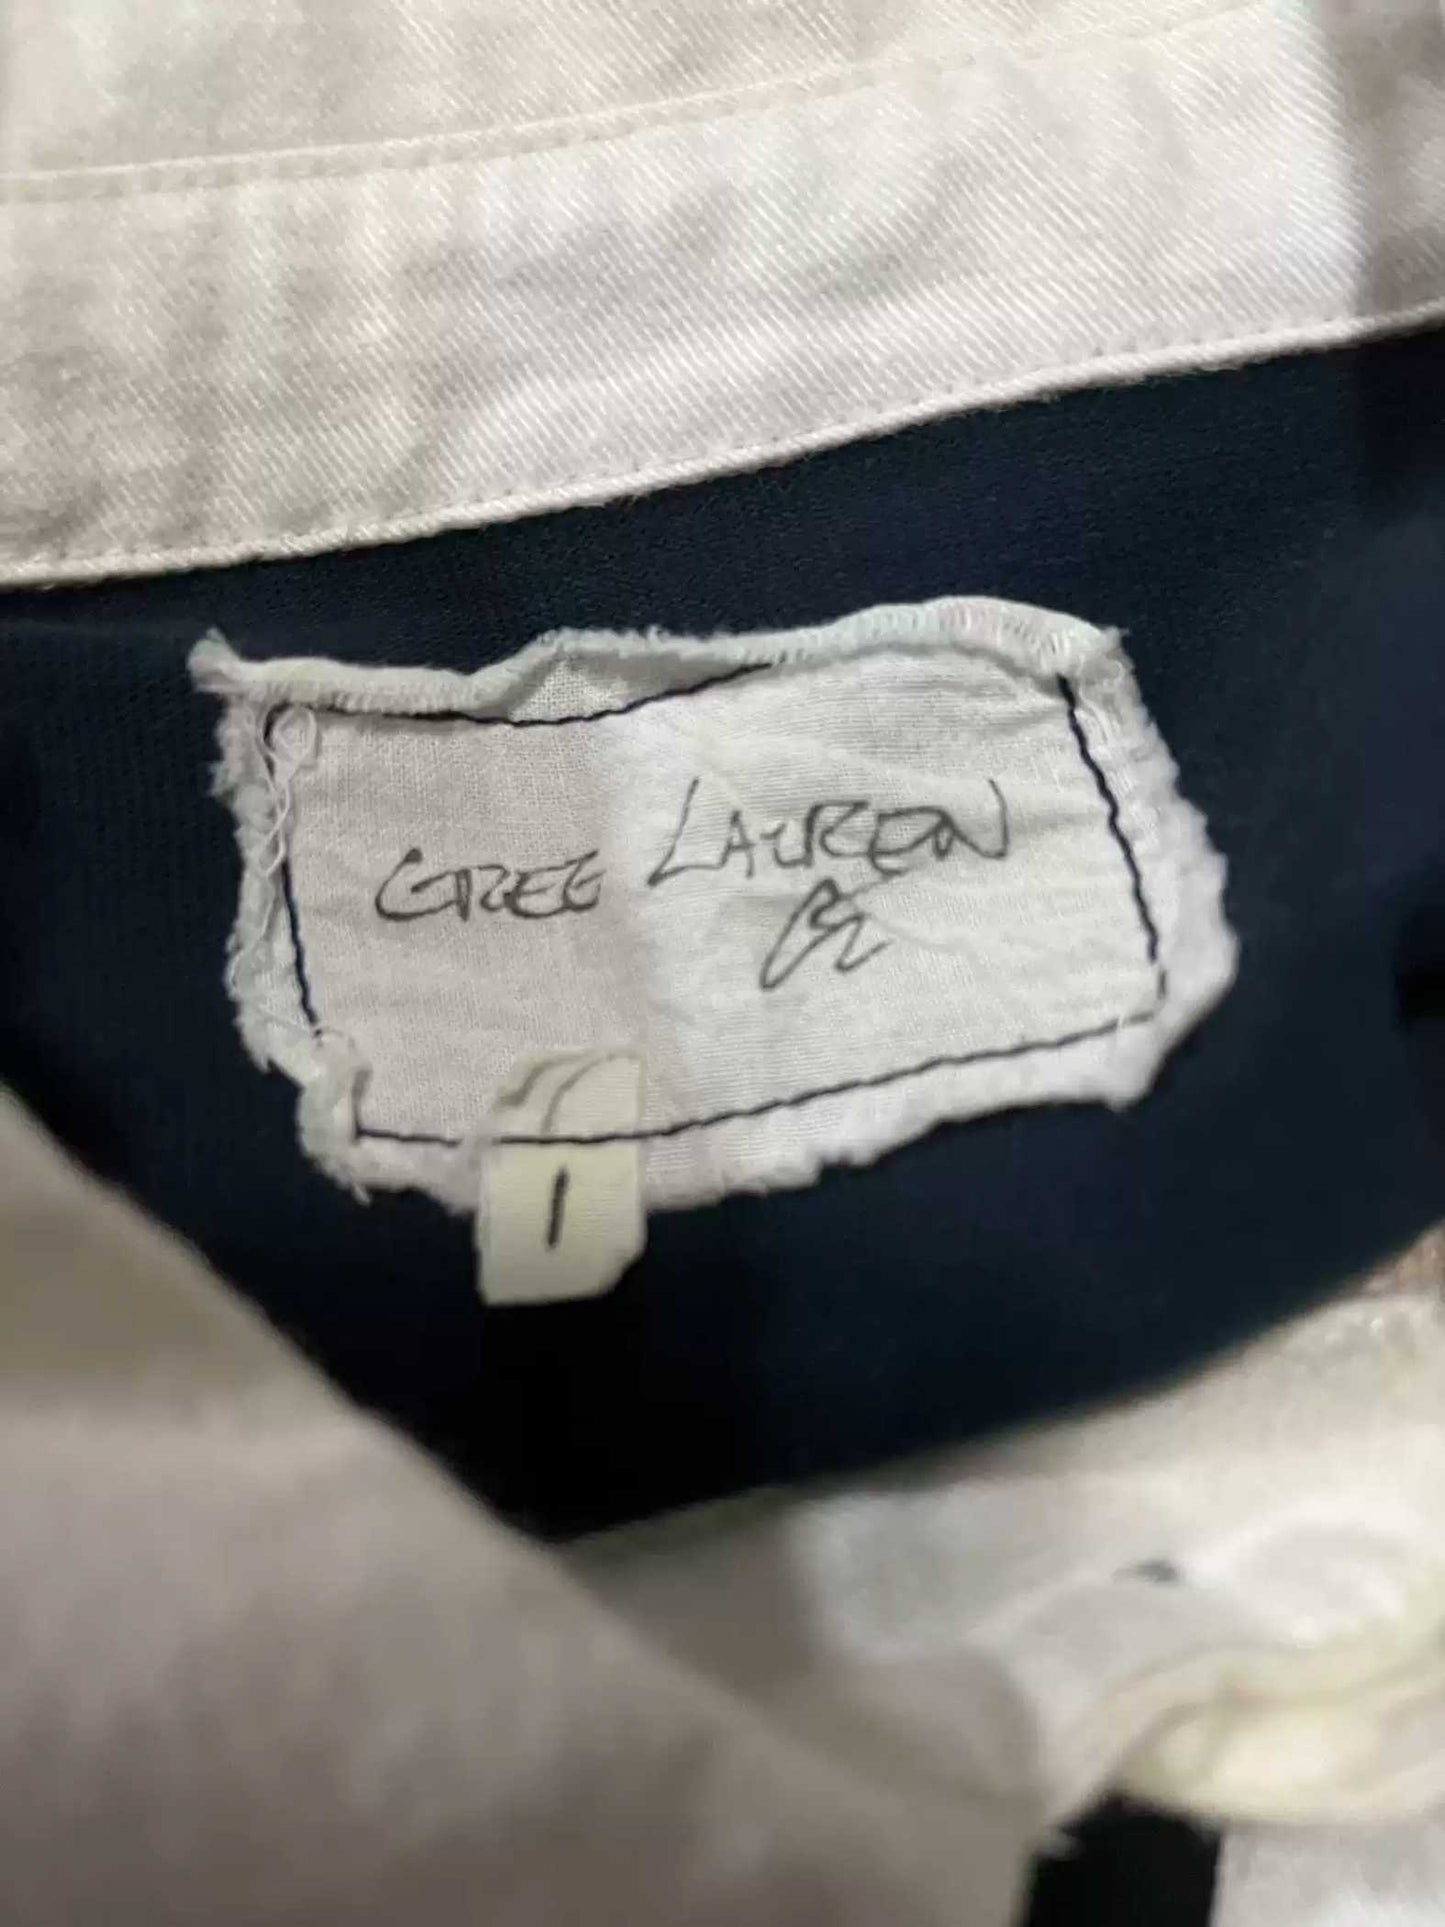 Greg Lauren Rubgy Vintage Polo Hoodie Size S